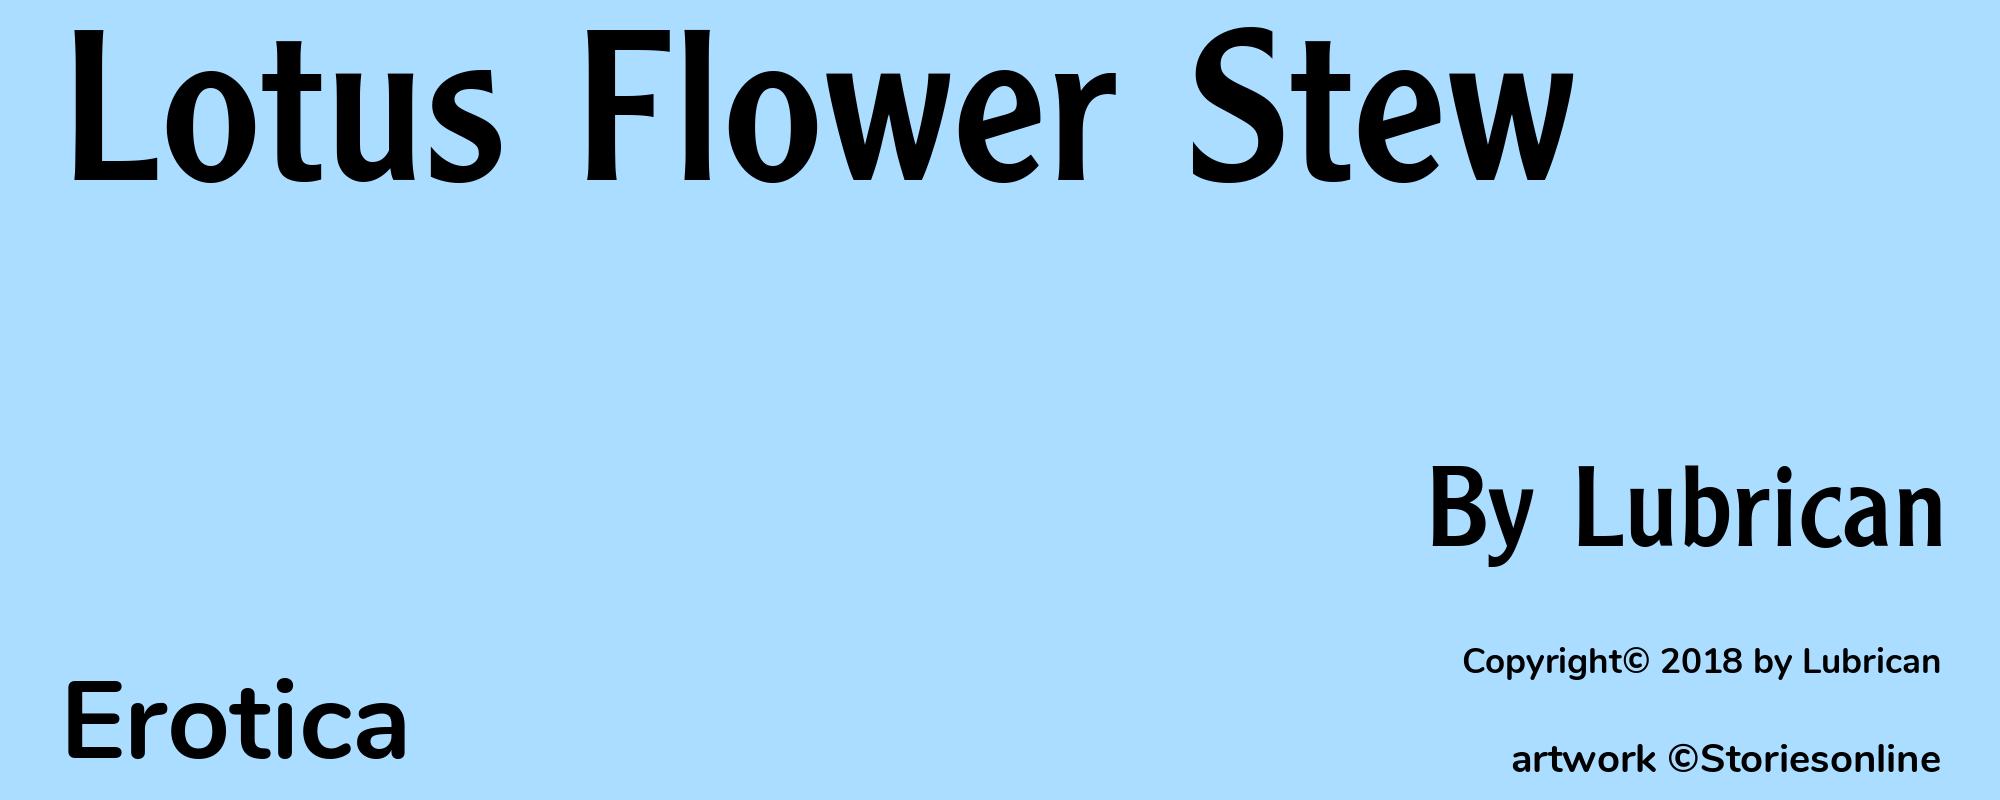 Lotus Flower Stew - Cover